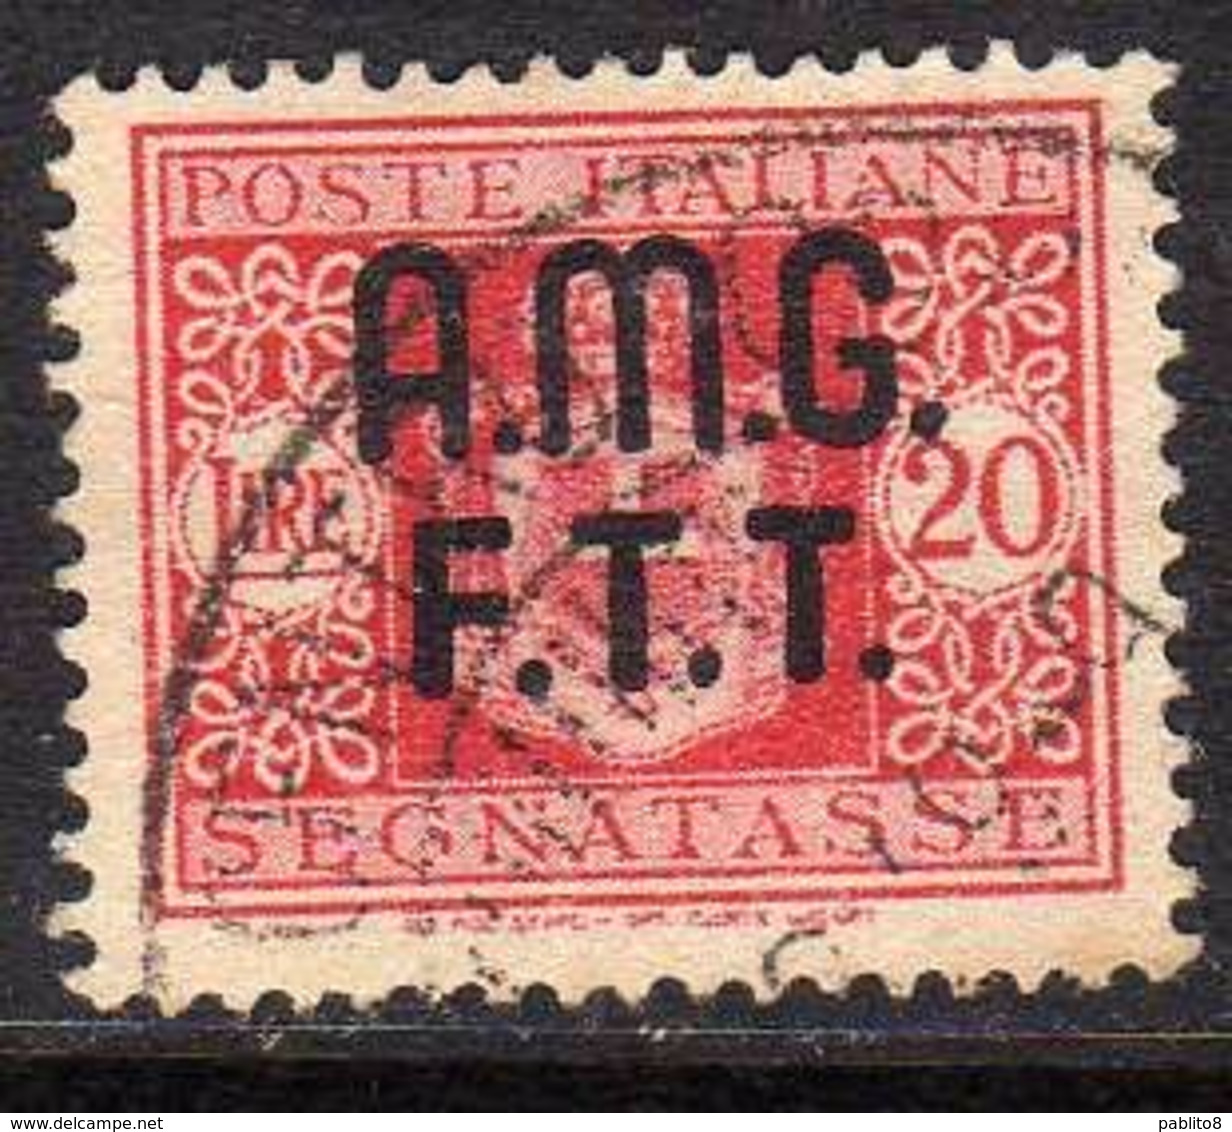 TRIESTE A 1947 AMG-FTT SOPRASTAMPATO D'ITALIA ITALY OVERPRINTED SEGNATASSE TAXES TASSE LIRE 20 USATO USED OBLITERE' - Taxe